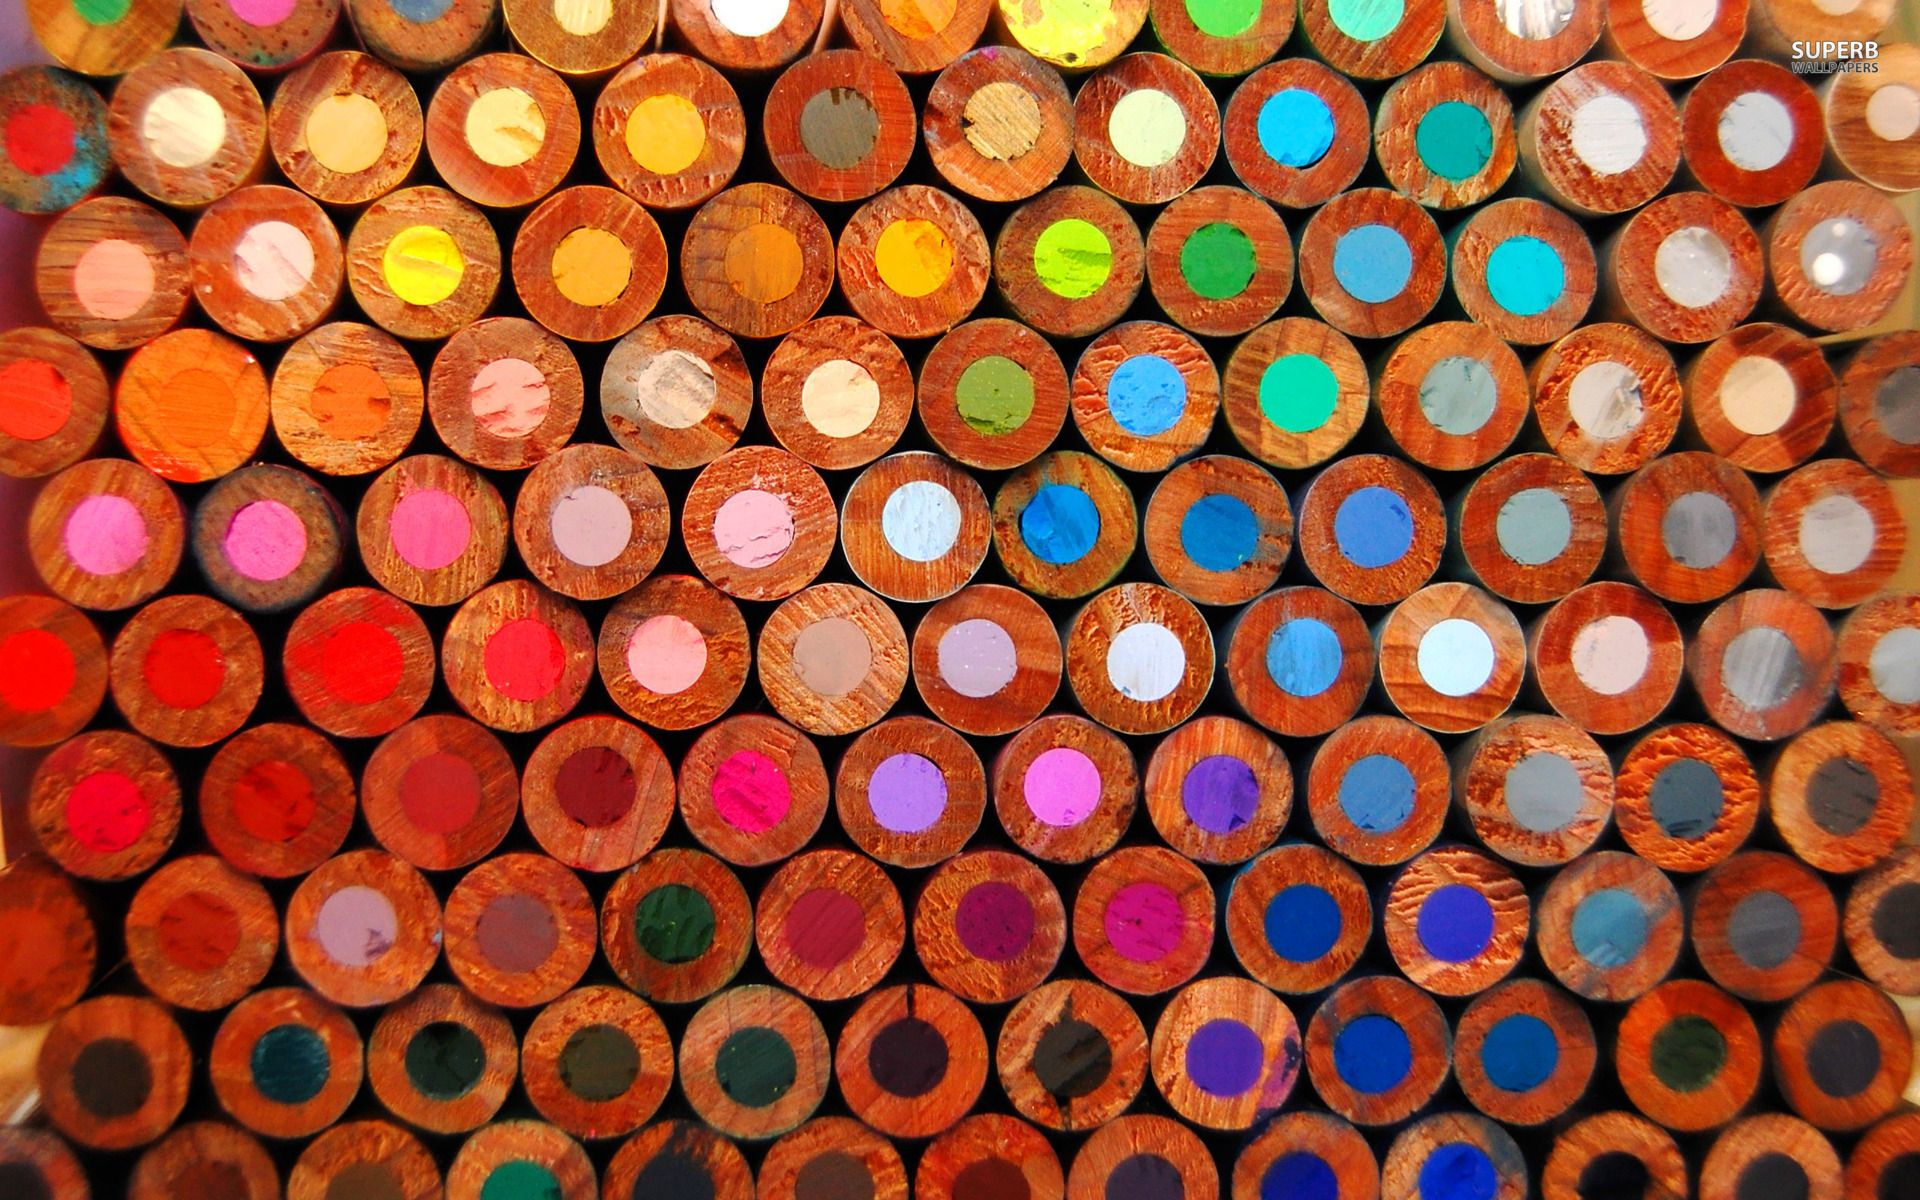 colorful-pencils-22175-1920x1200.jpg